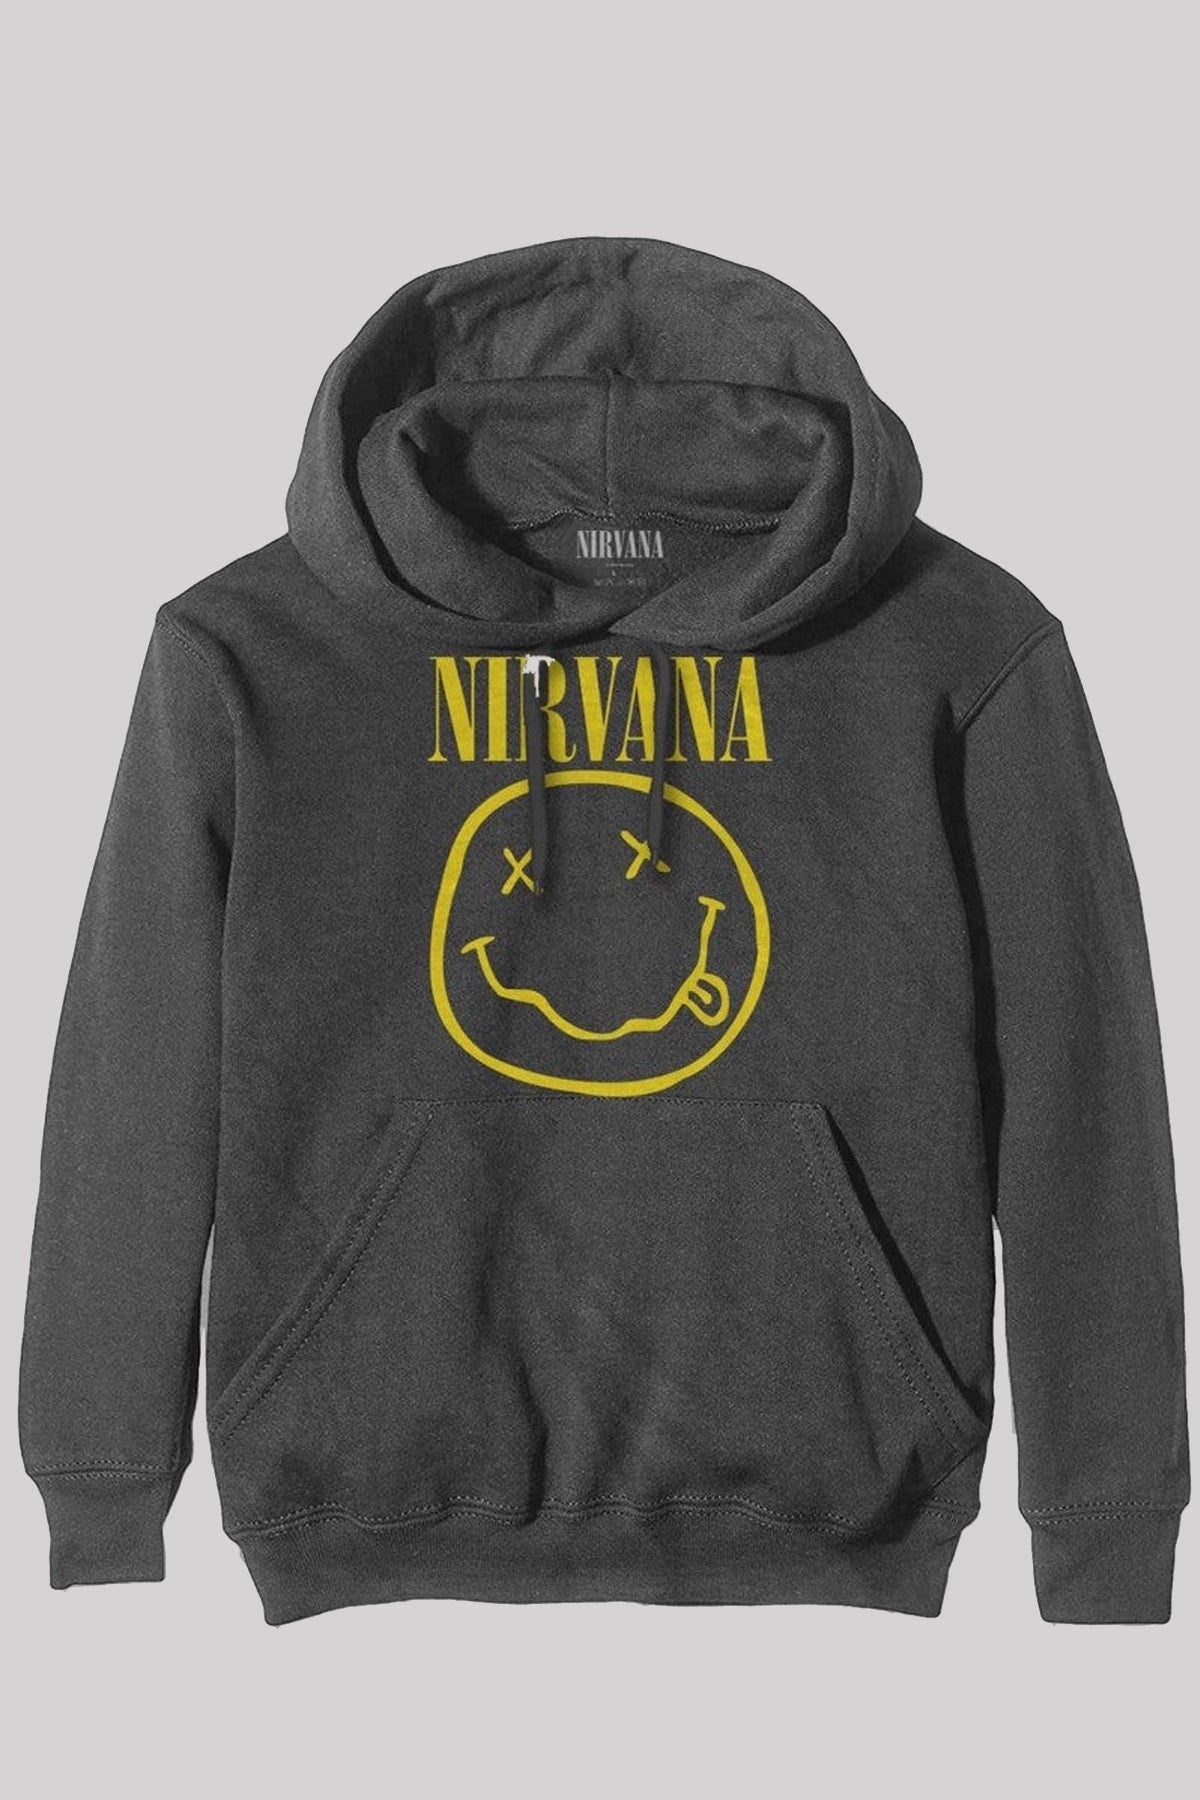 Nirvana Unisex Yellow Happy Face Hoodie